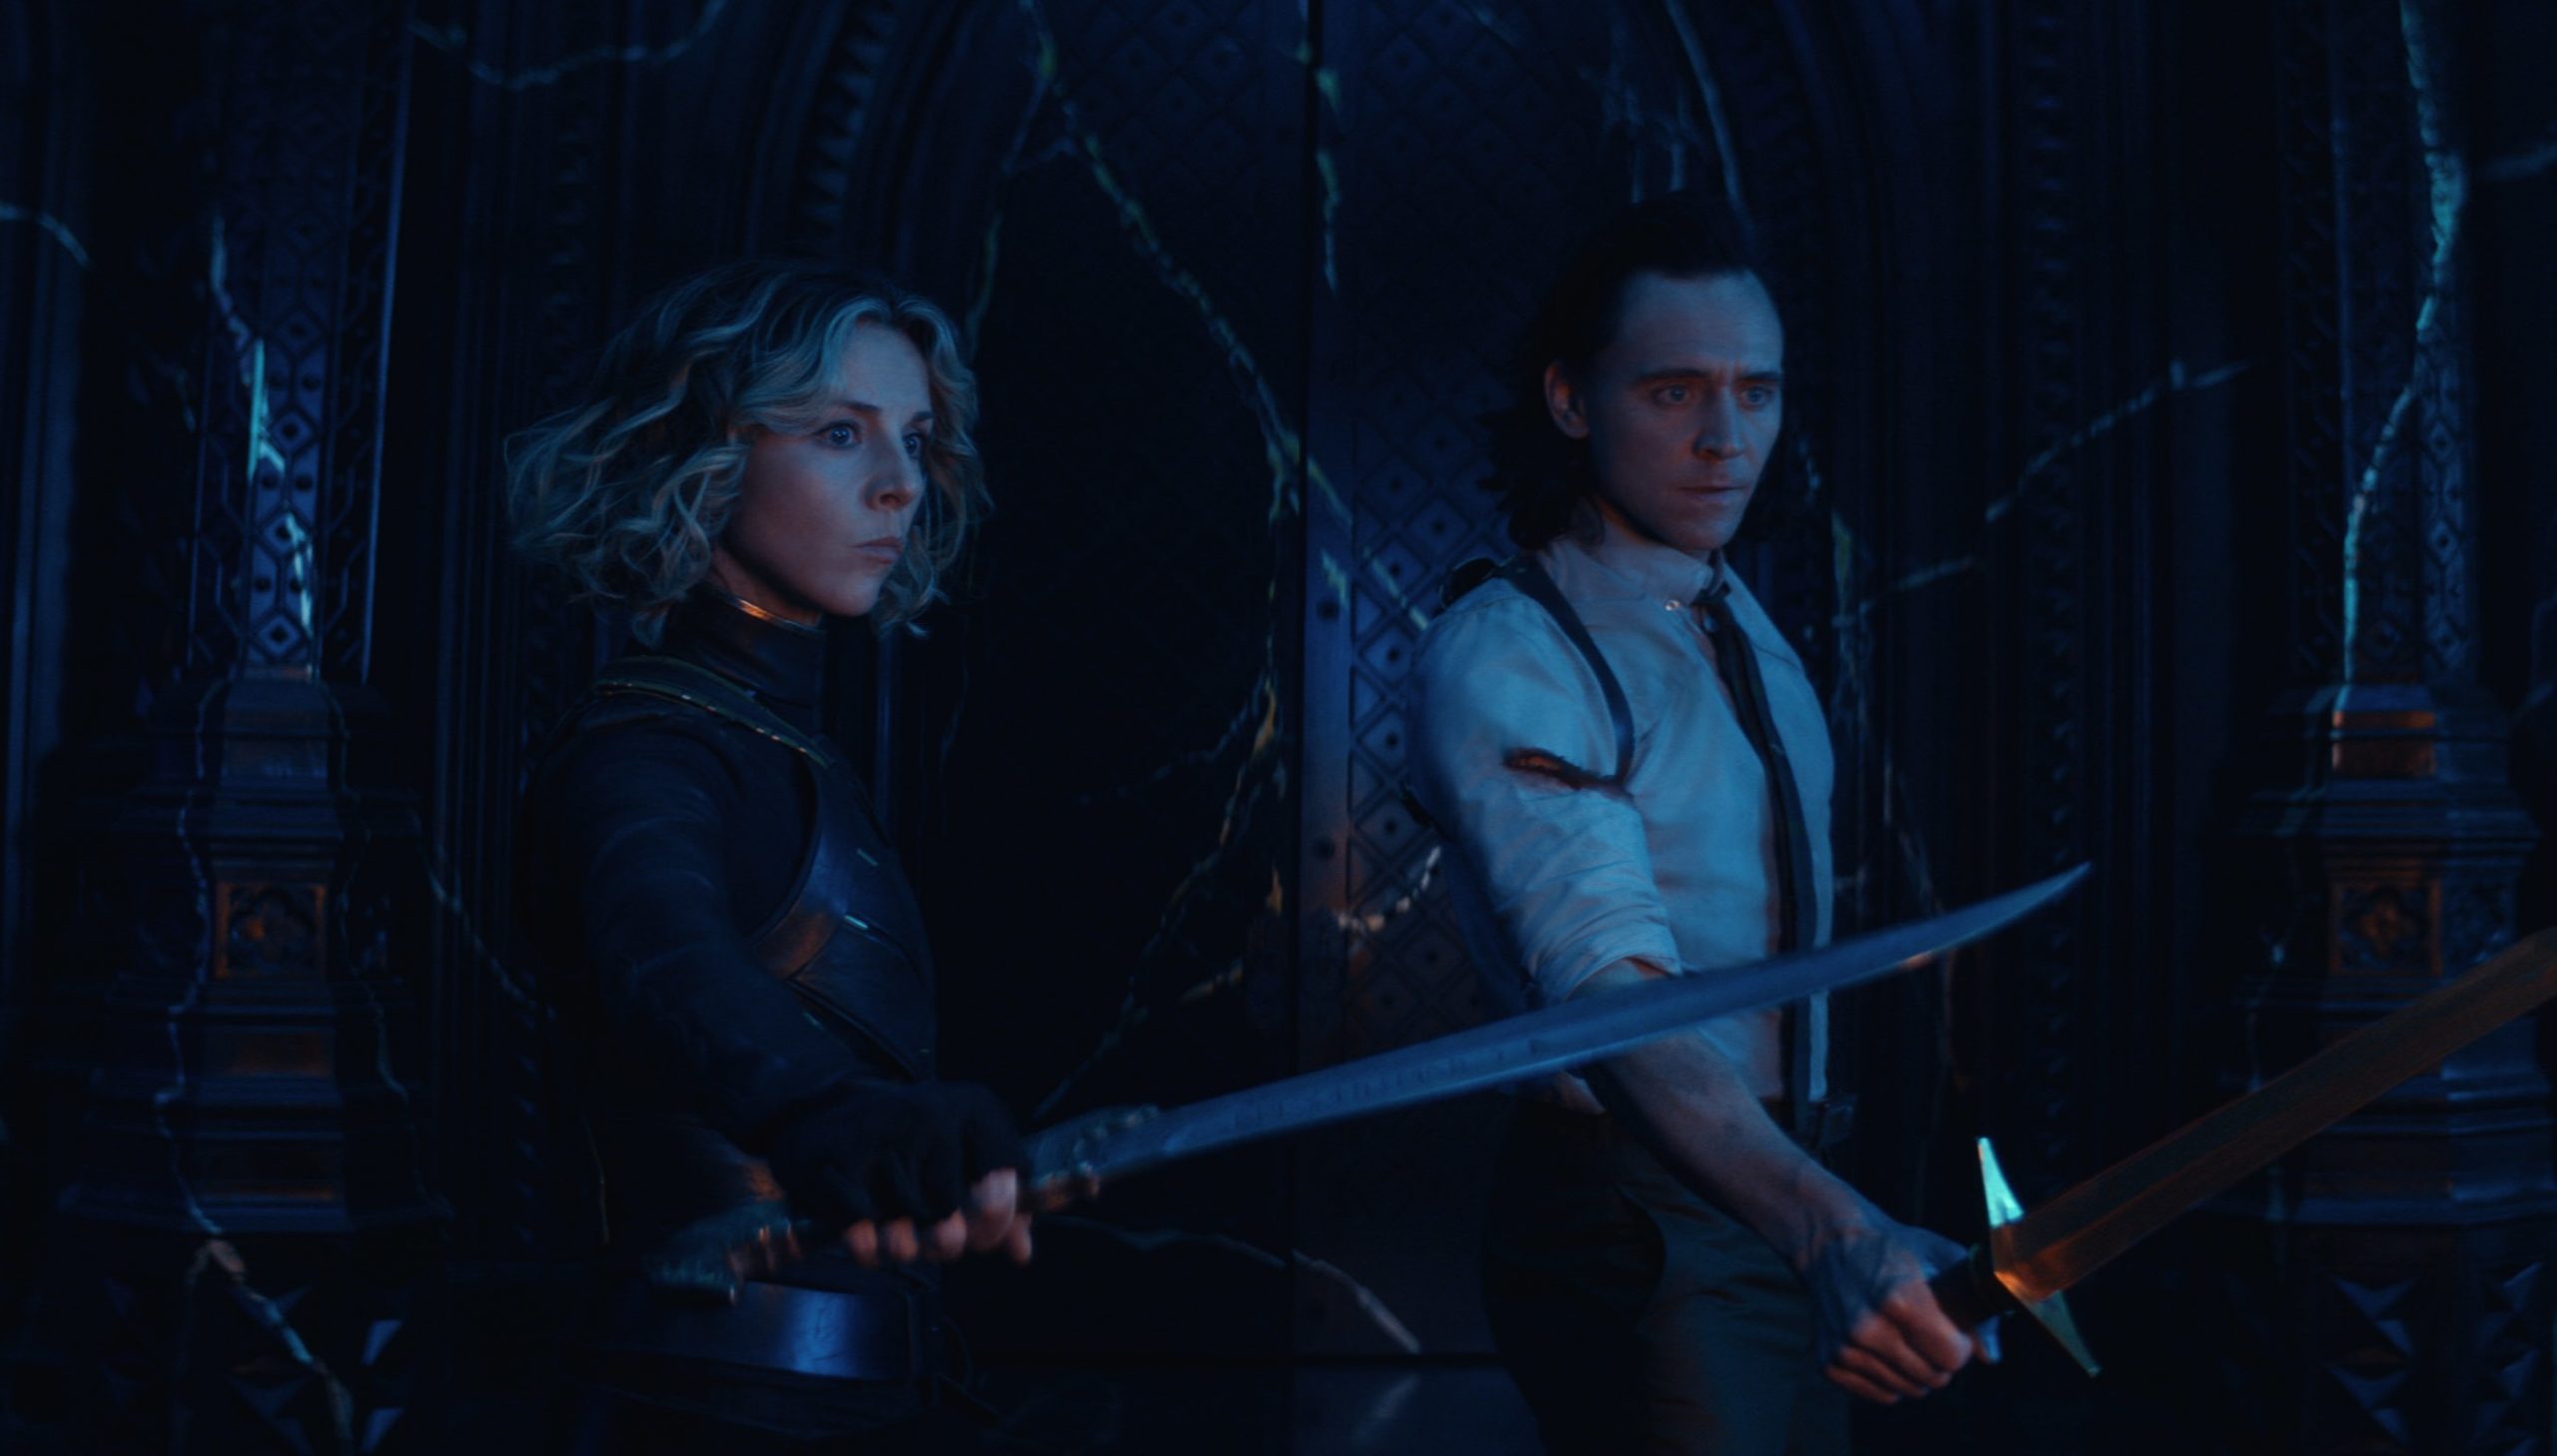 Loki season 2 will not be released until 2023